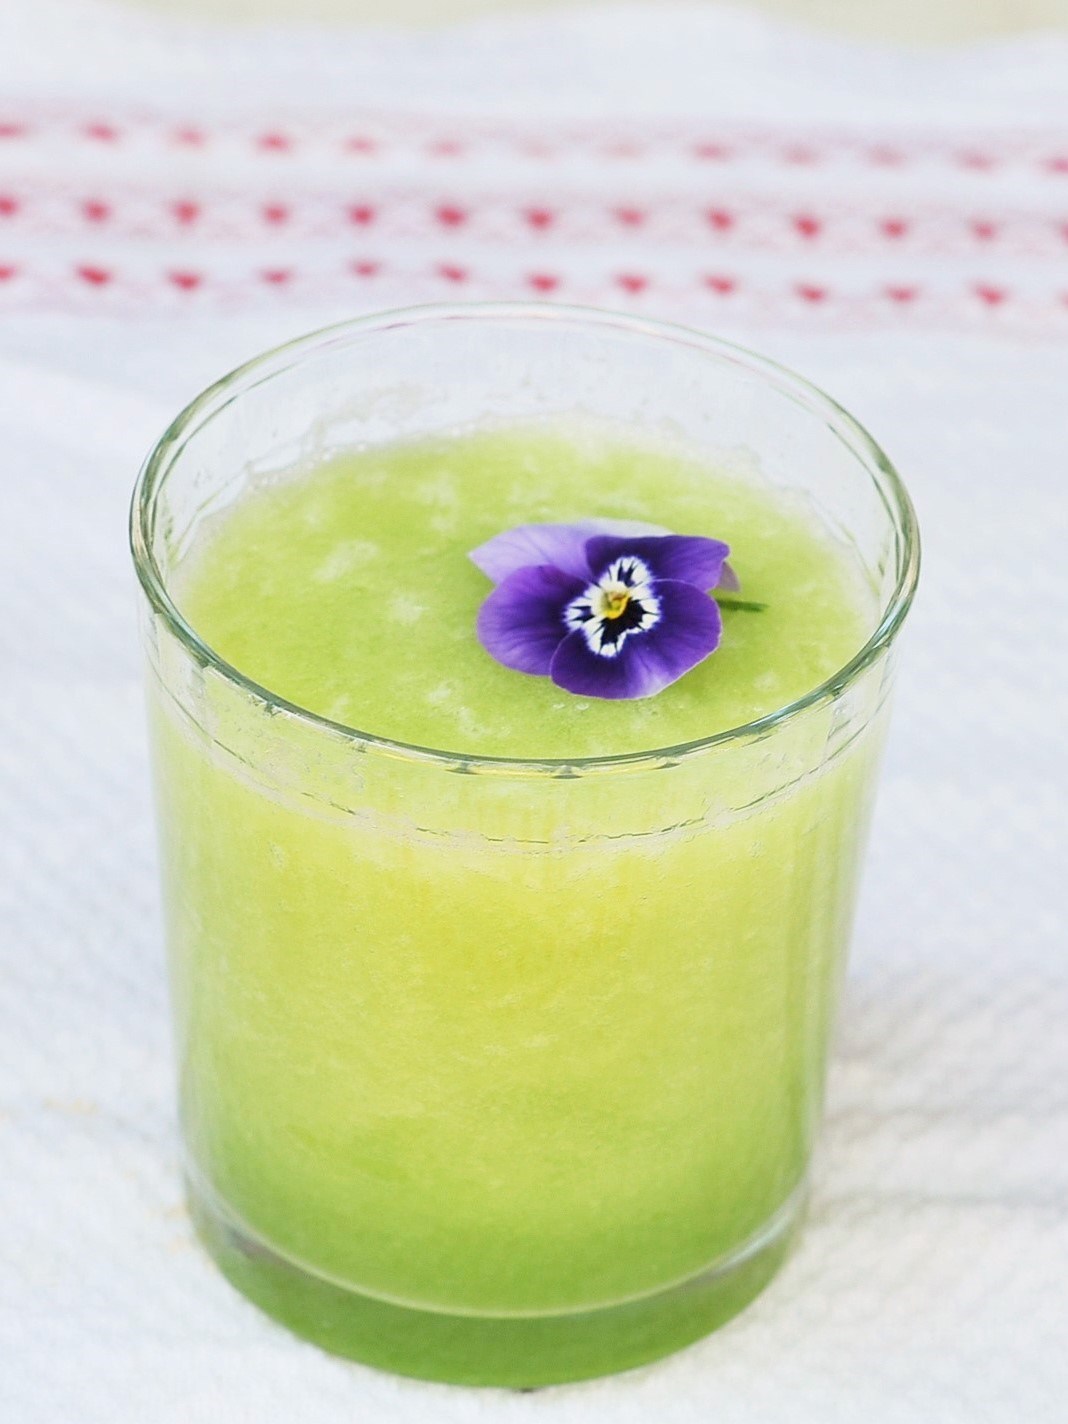 http://thecottagemarket.com/wp-content/uploads/2016/07/Honeydew-melon-juice-Kiku-Corner-2.jpg